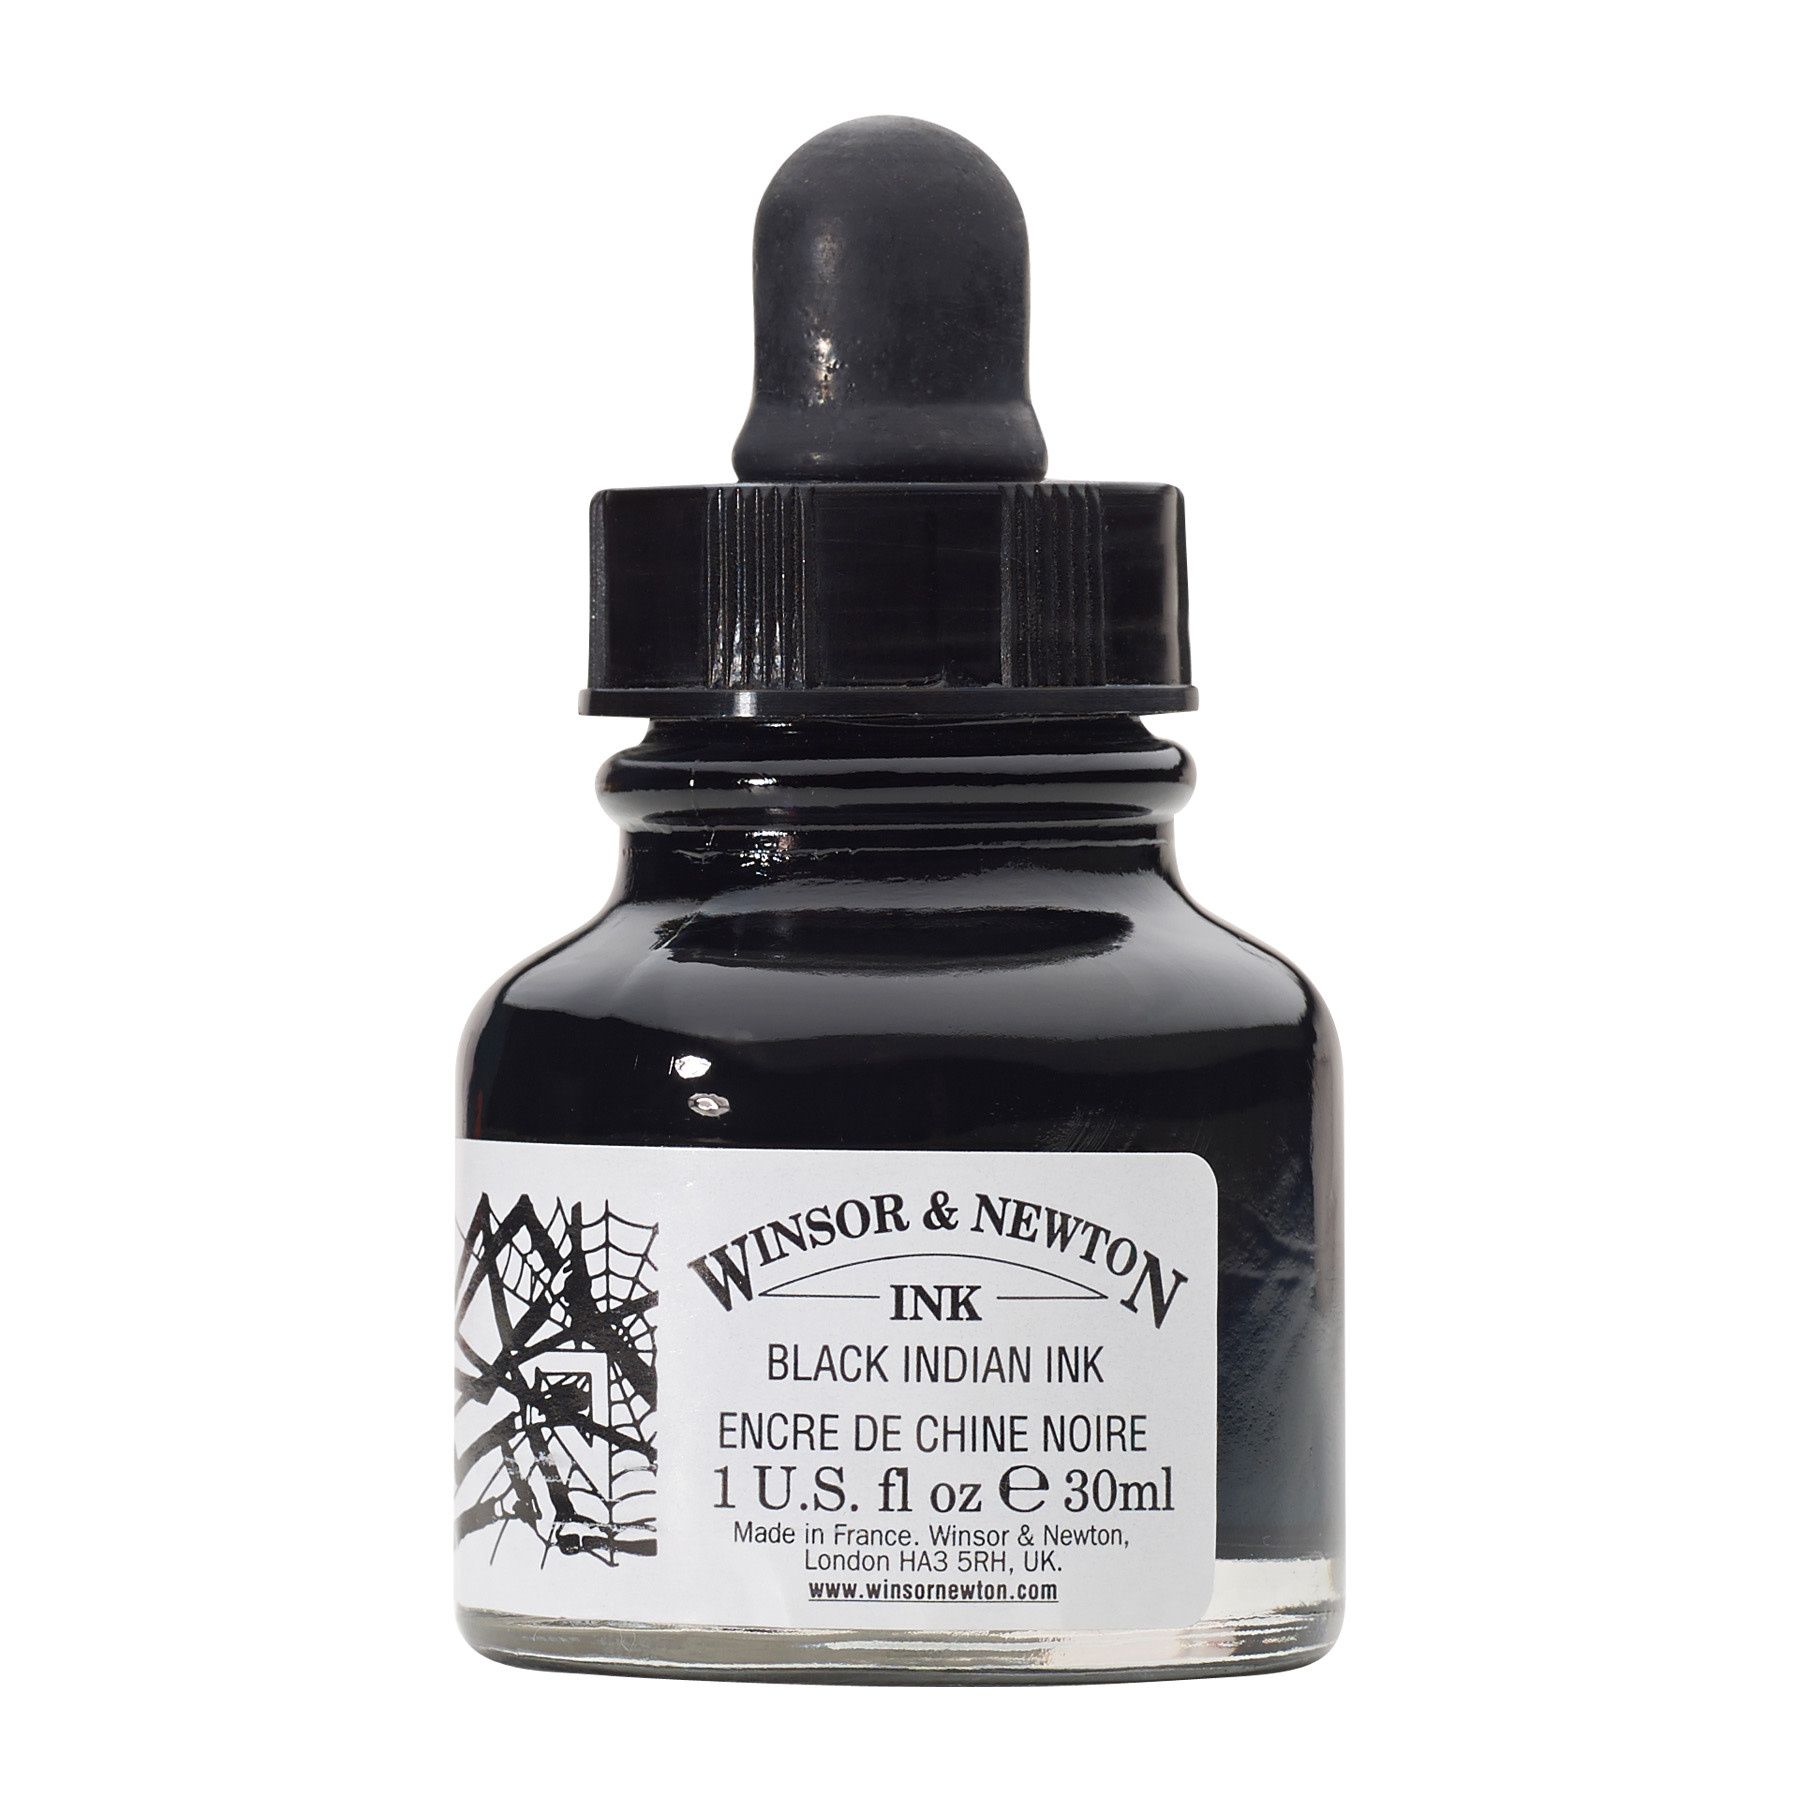 Winsor & Newton Black Indian Ink – Art Material Supplies